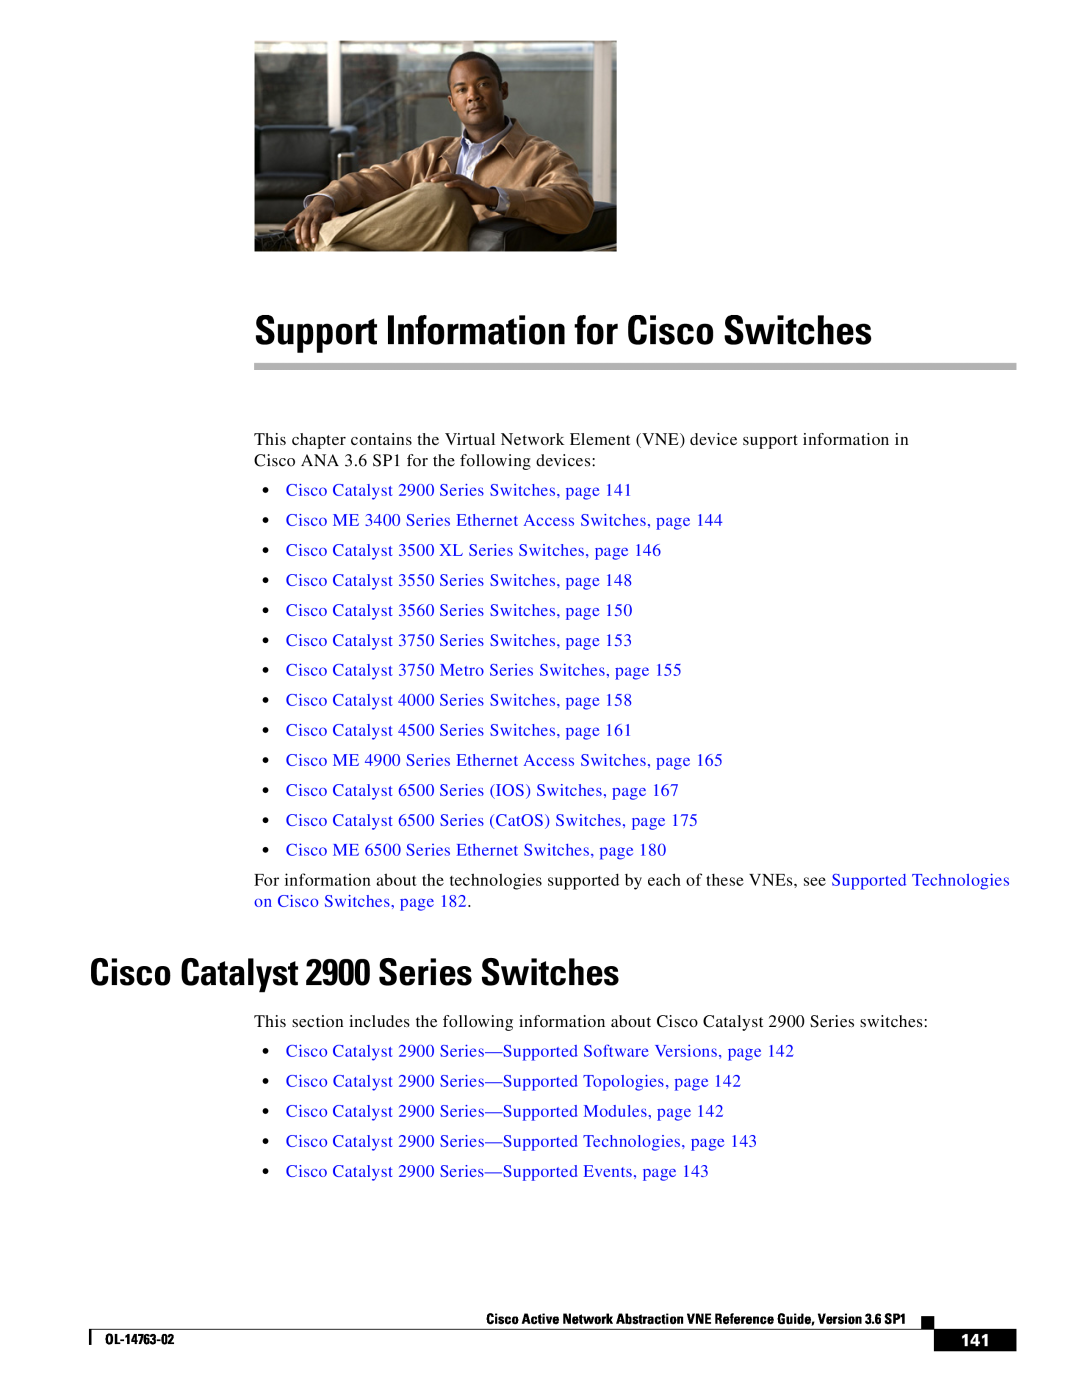 Cisco Systems OL-14763-02 manual Cisco Catalyst 2900 Series Switches, page, Cisco Catalyst 3550 Series Switches, page 